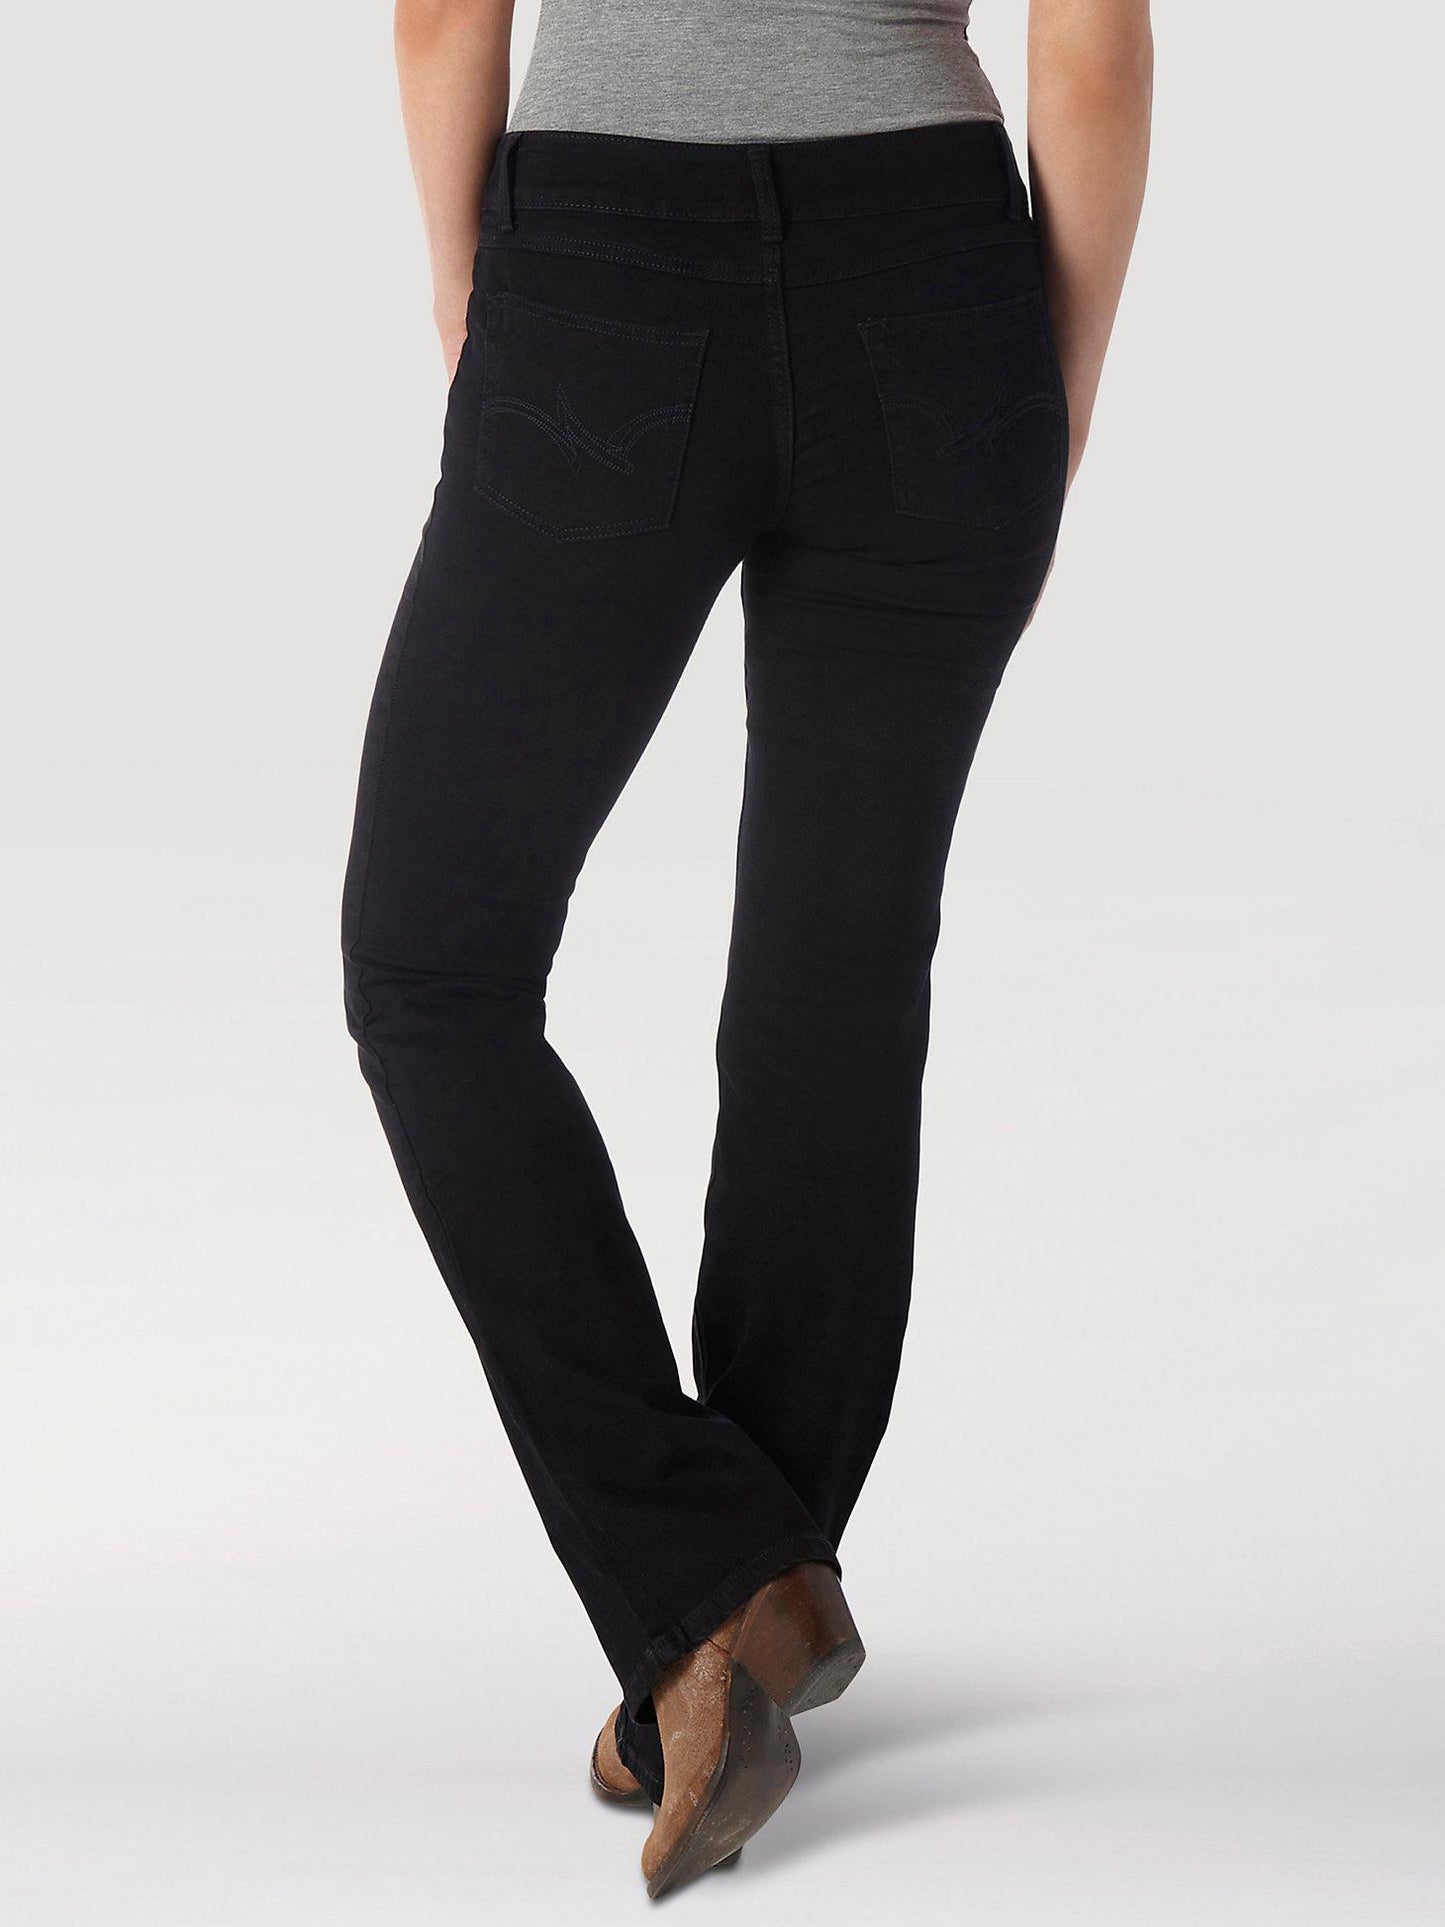 Wrangler Women's Essential Mid-Rise Bootcut Jean In Black 09MWZBK